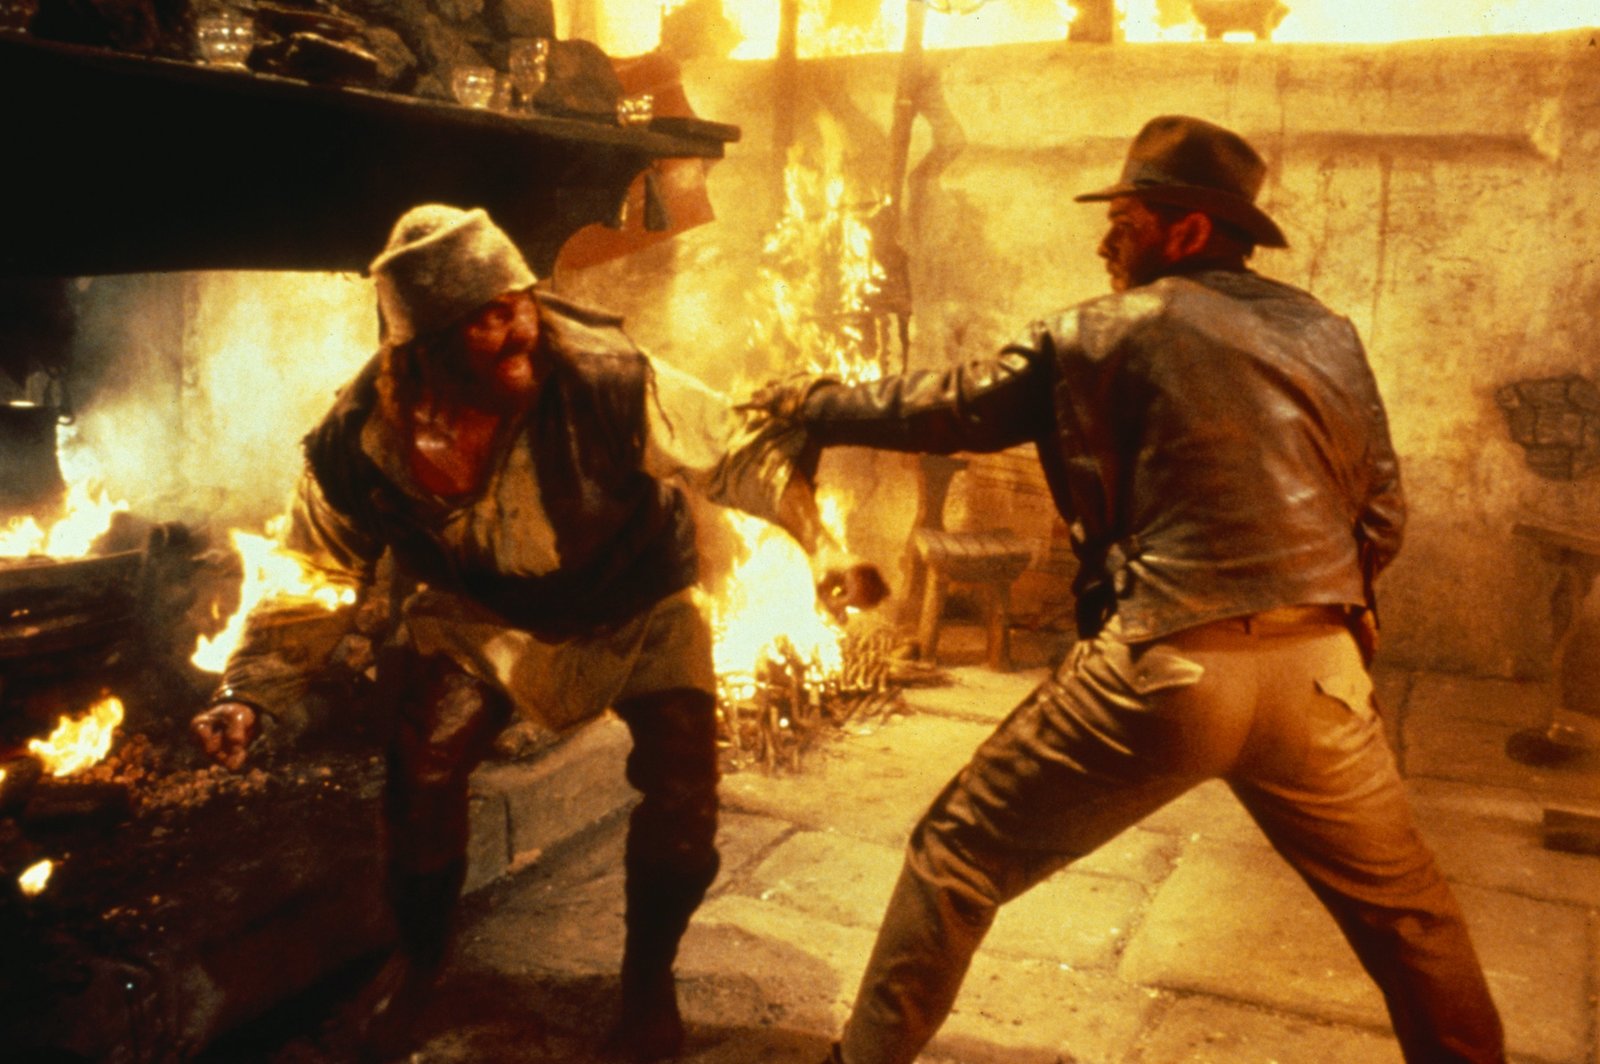 Indiana Jones - Jäger des verlorenen Schatzes (4K Ultra HD)